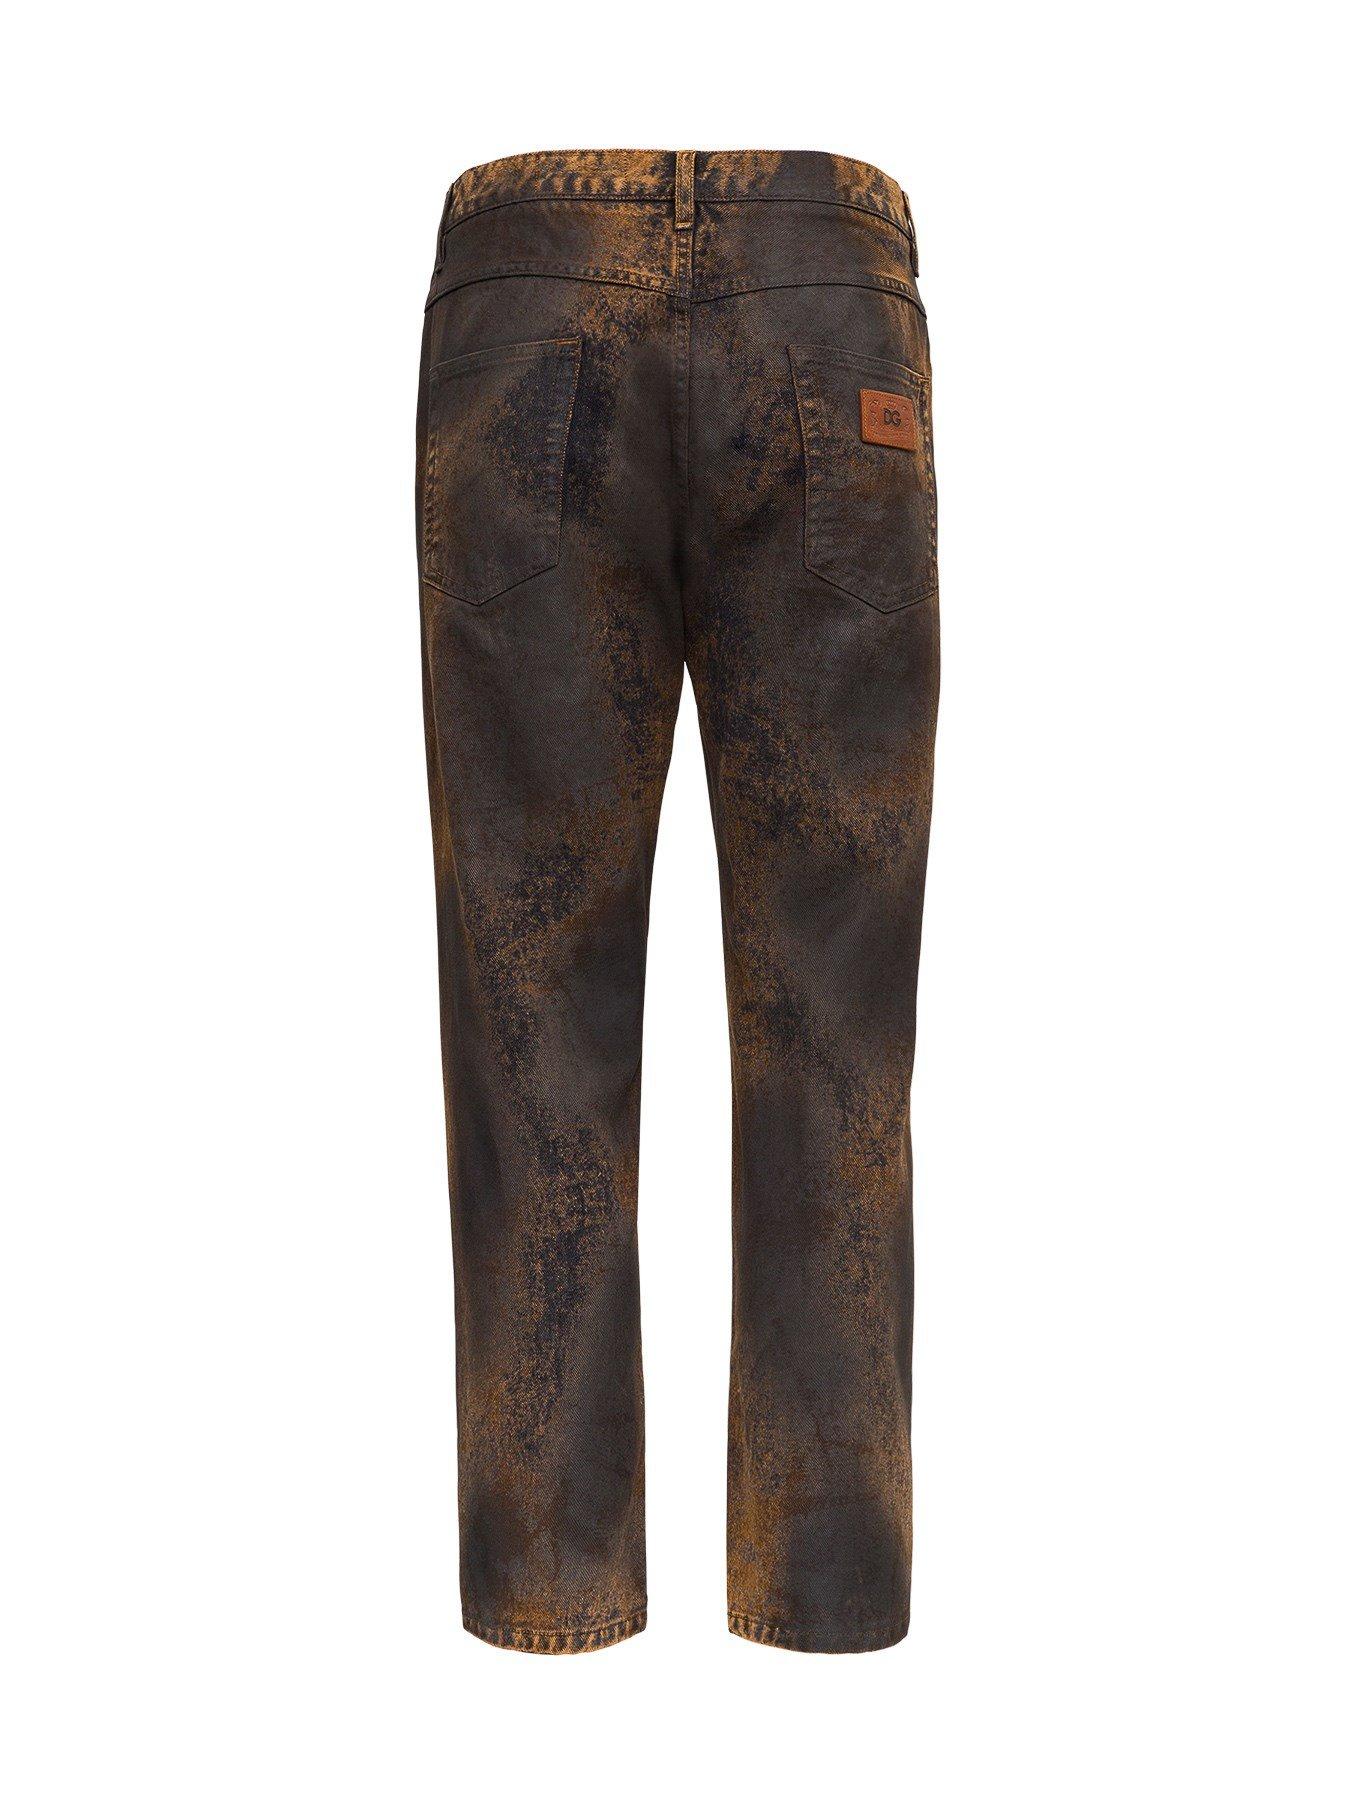 Buy Spykar Brown Cotton Regular Fit Jeans for Mens Online @ Tata CLiQ